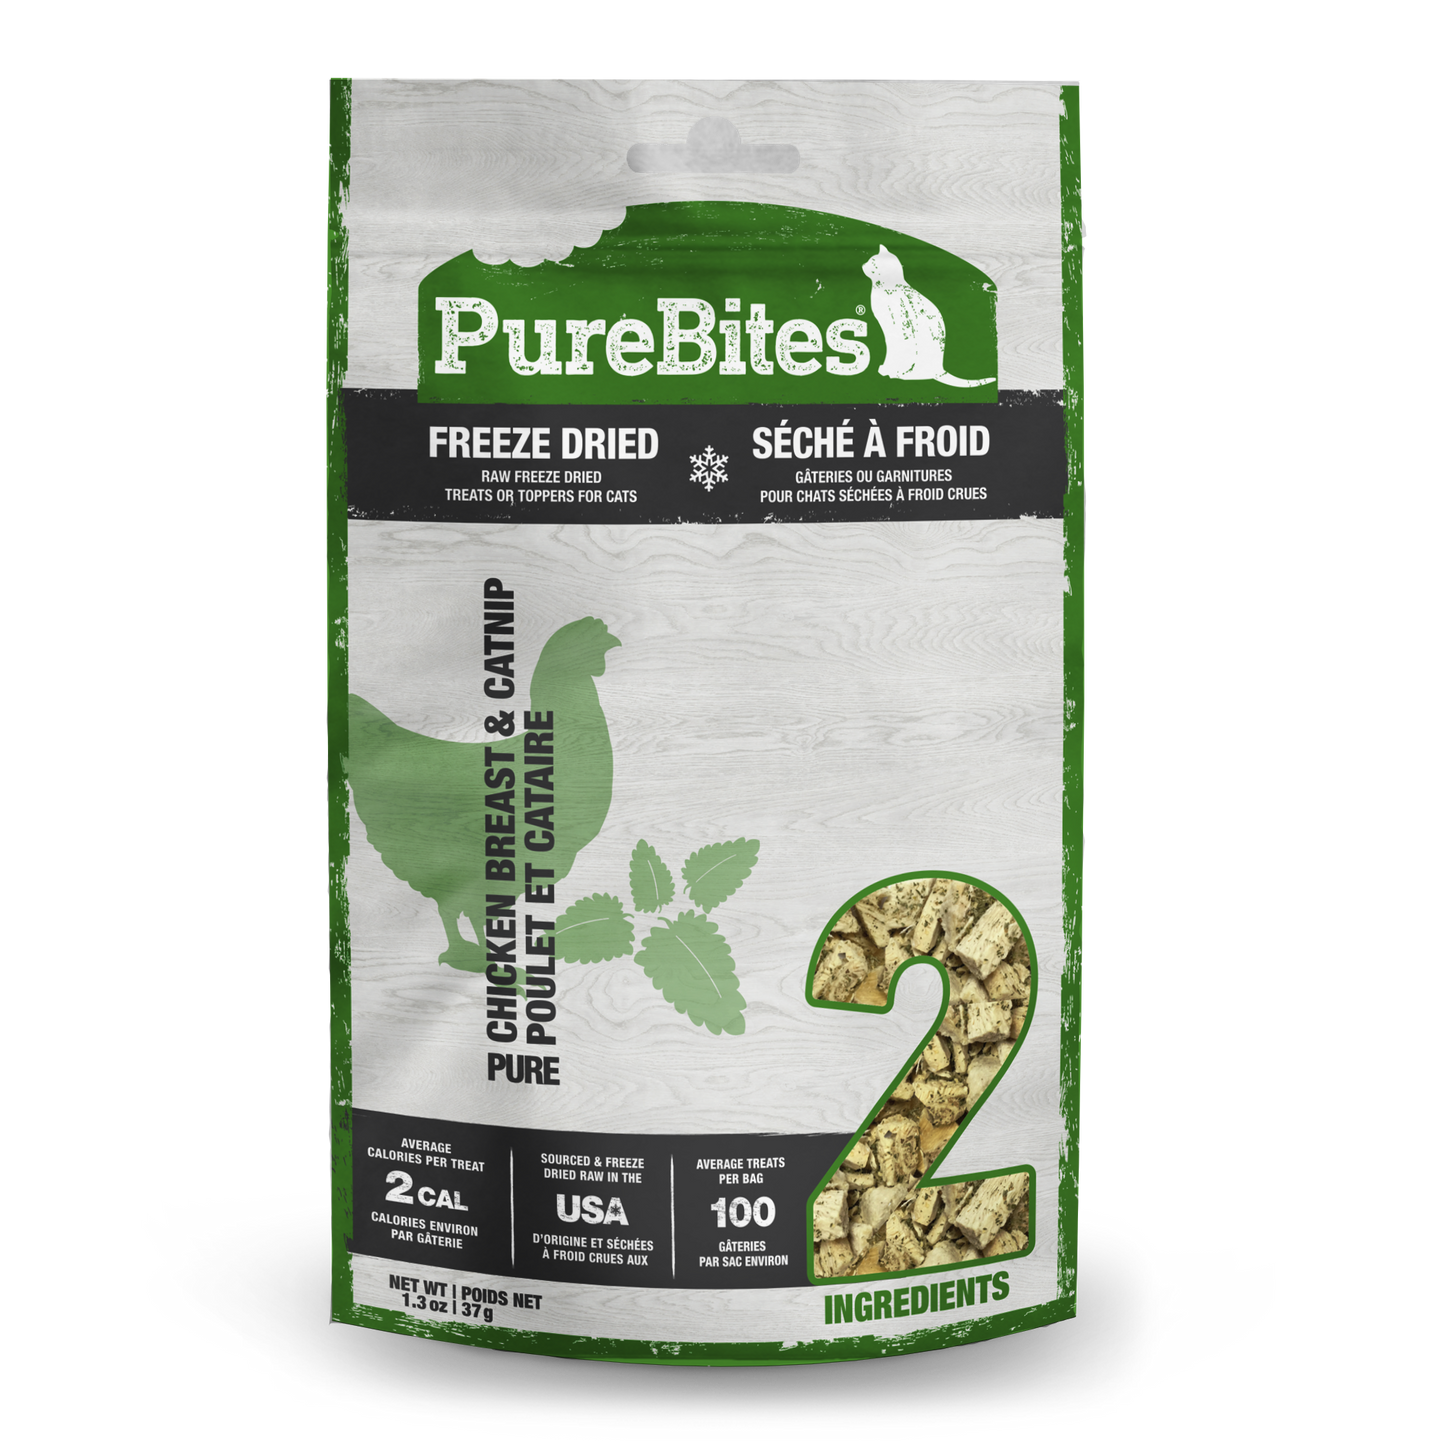 PureBites Freeze-Dried Cat Treats, Chicken And Catnip Recipe, 1.55-oz Bag